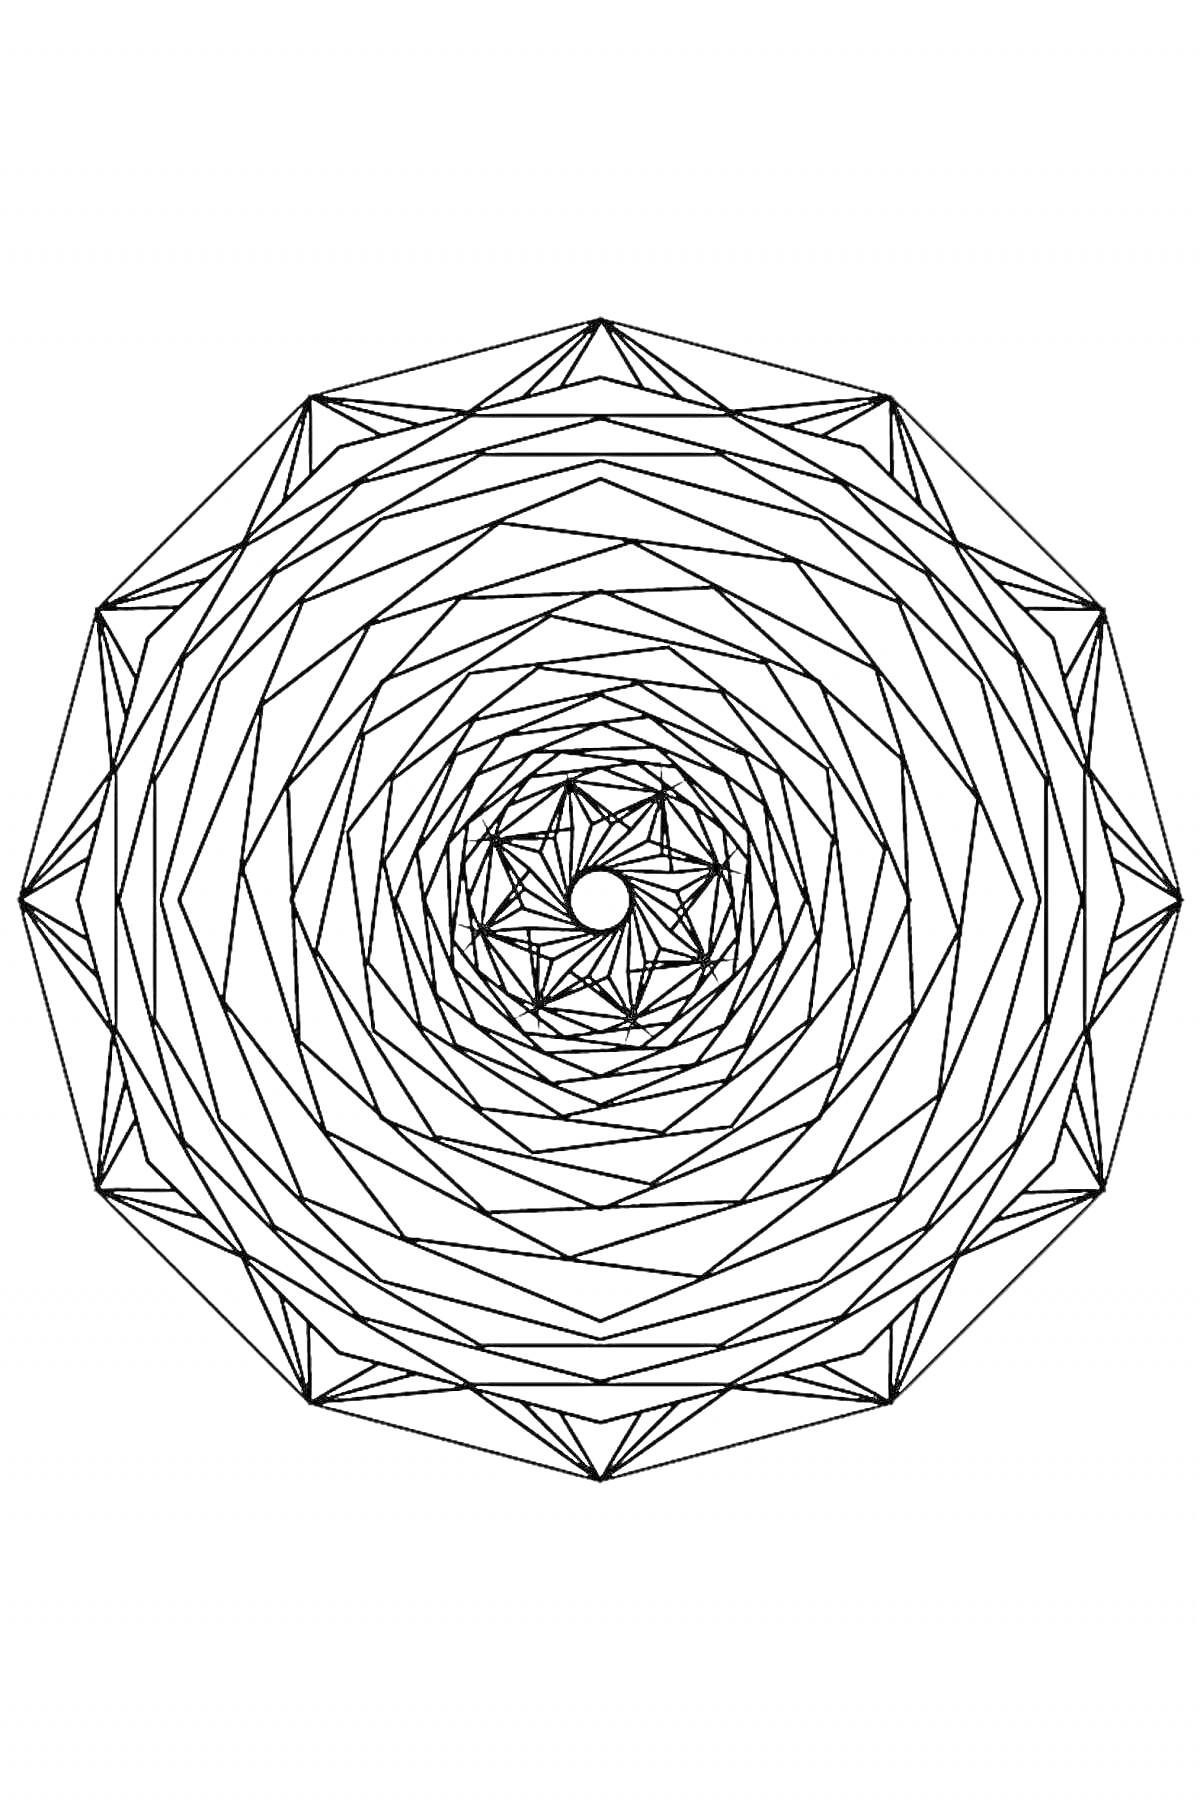 Мандала с геометрическим узором и концентрическими треугольниками